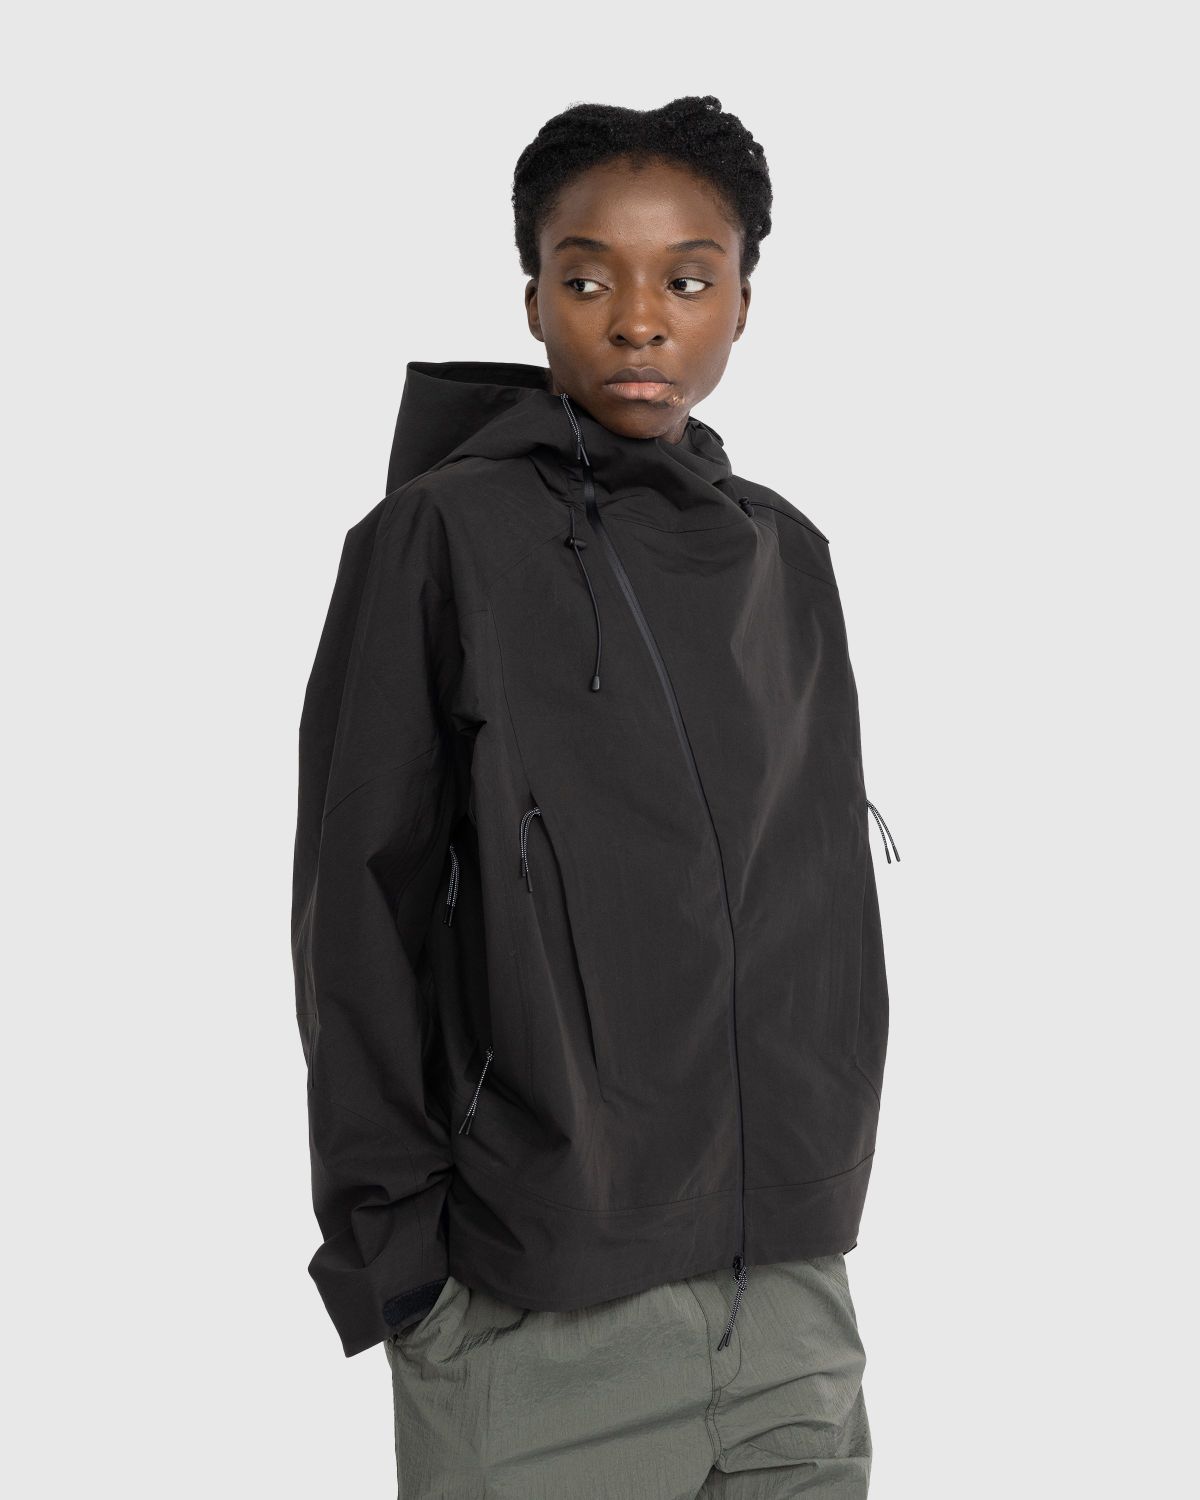 _J.L-A.L_ – Manifold Jacket Black - Outerwear - Black - Image 2